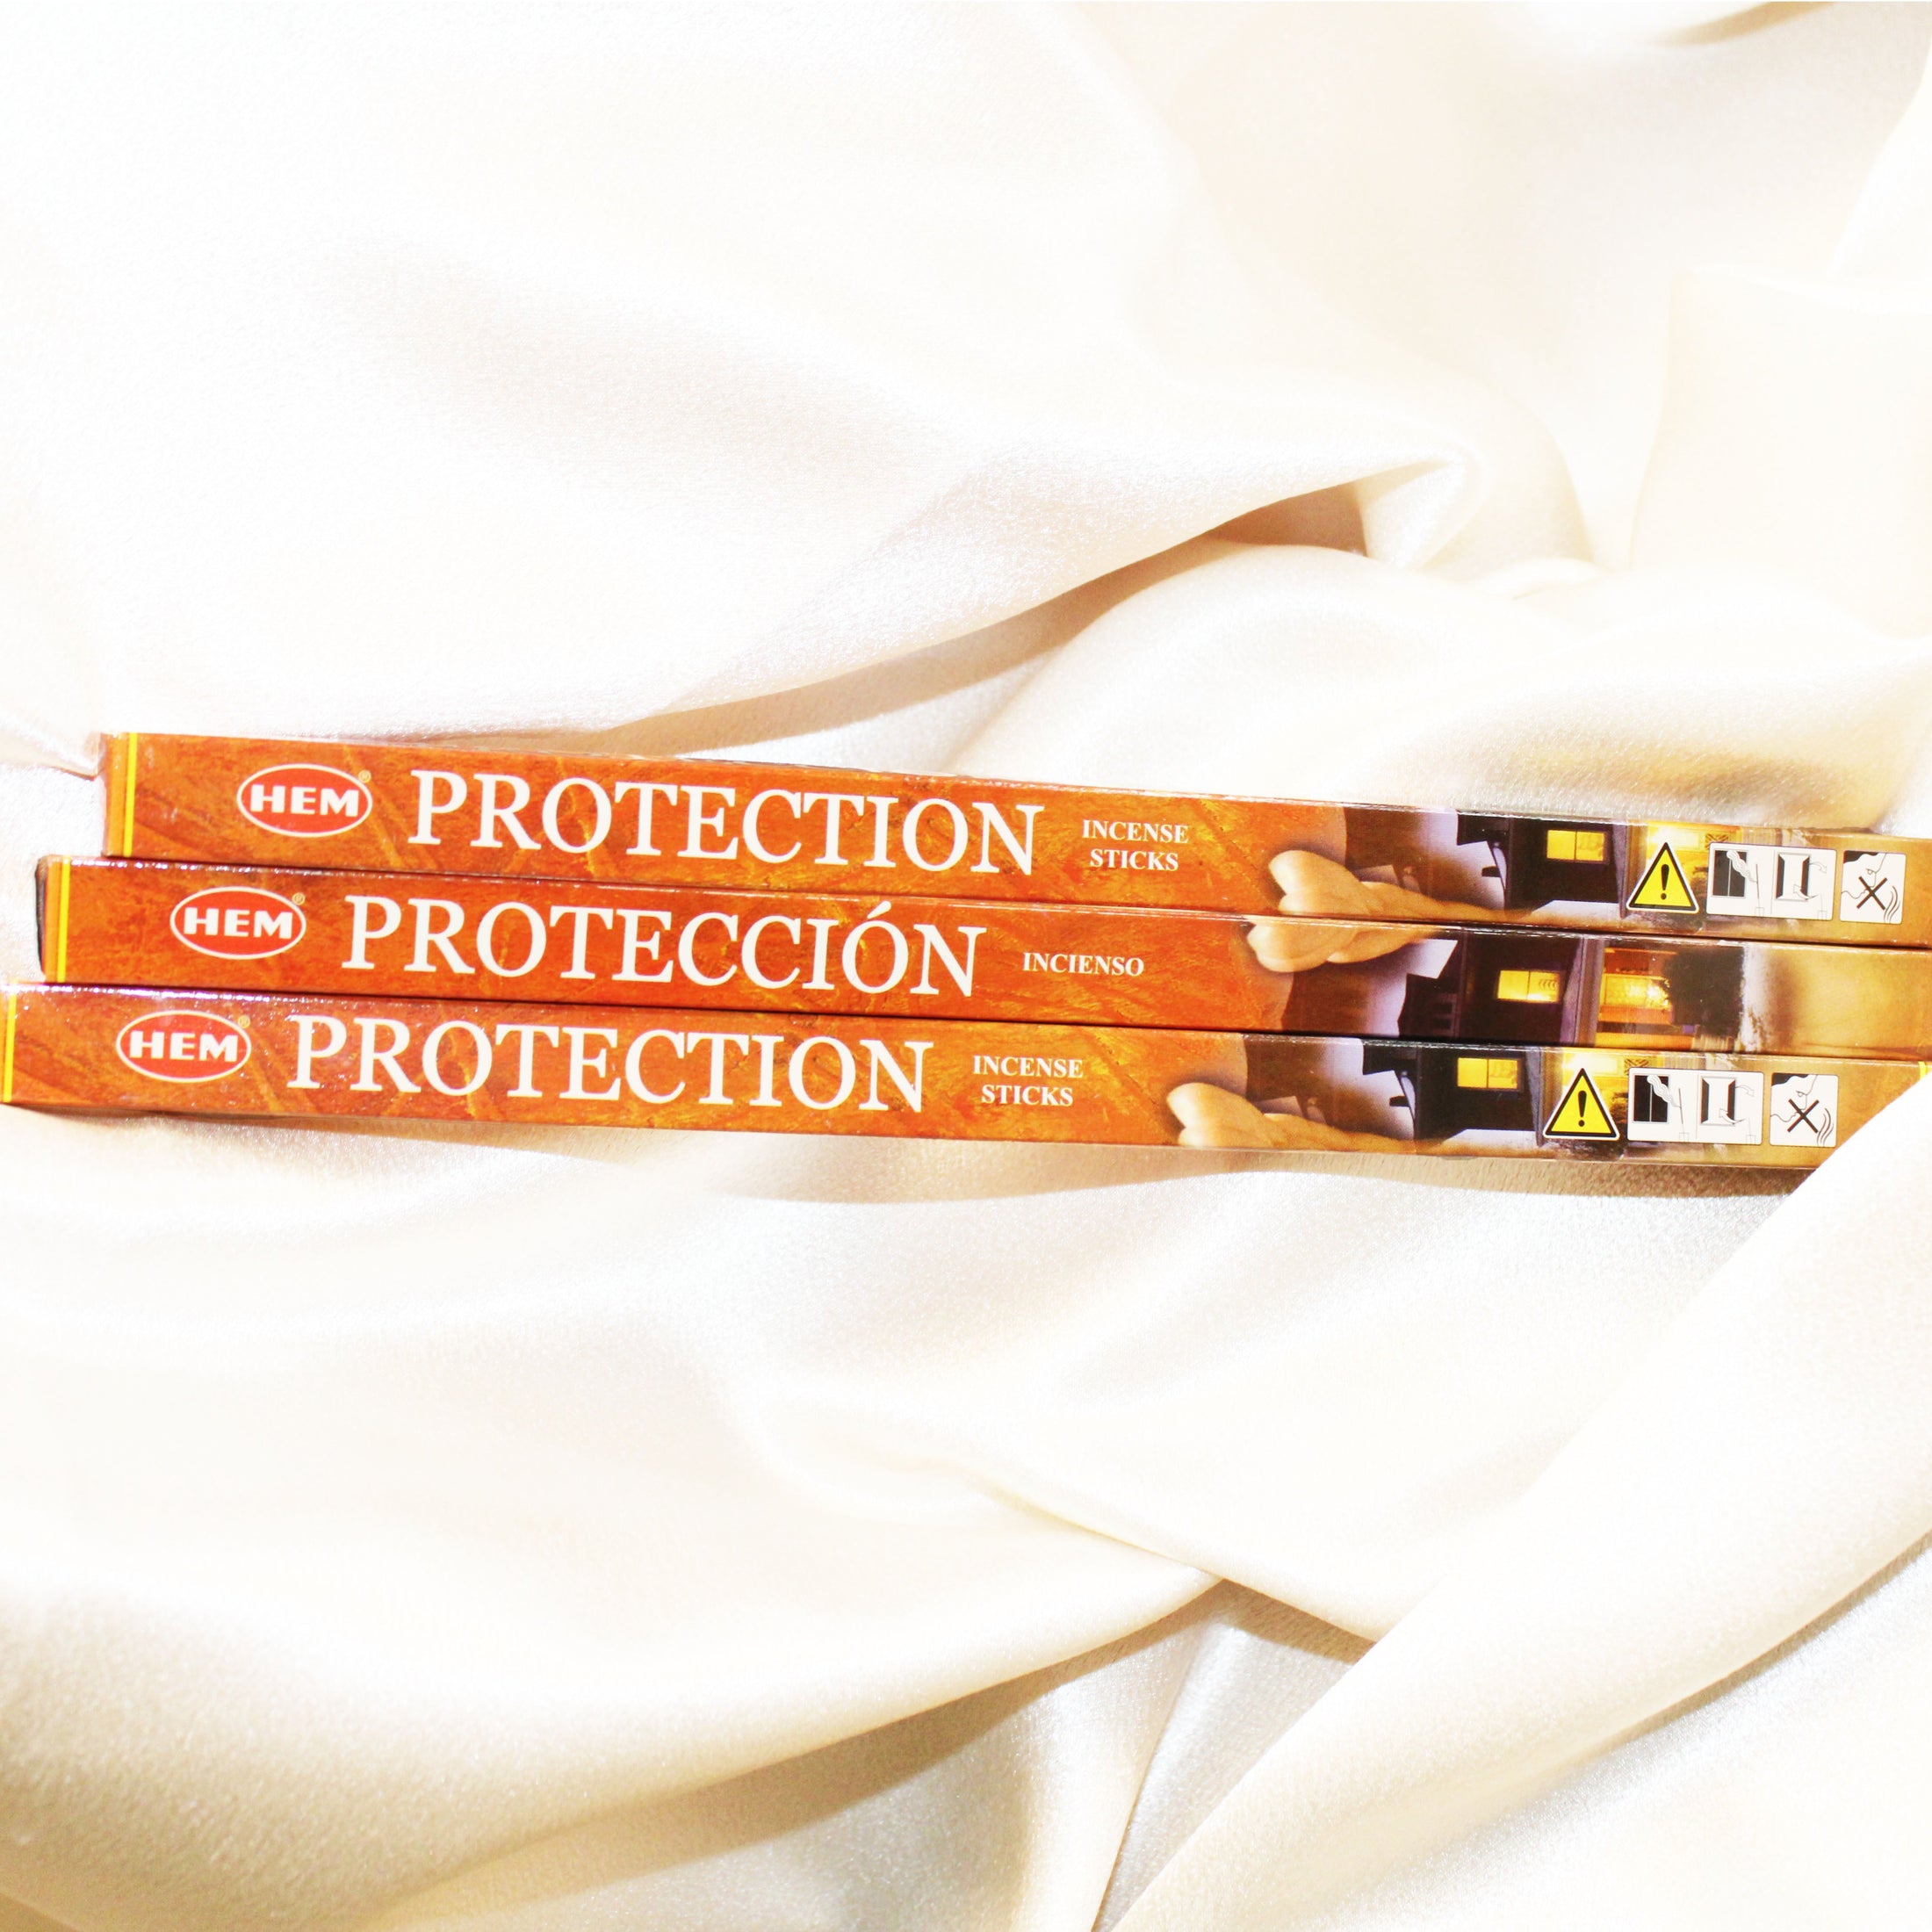 Hem- Protection (Proteccion) Incense (Incensio) Sticks